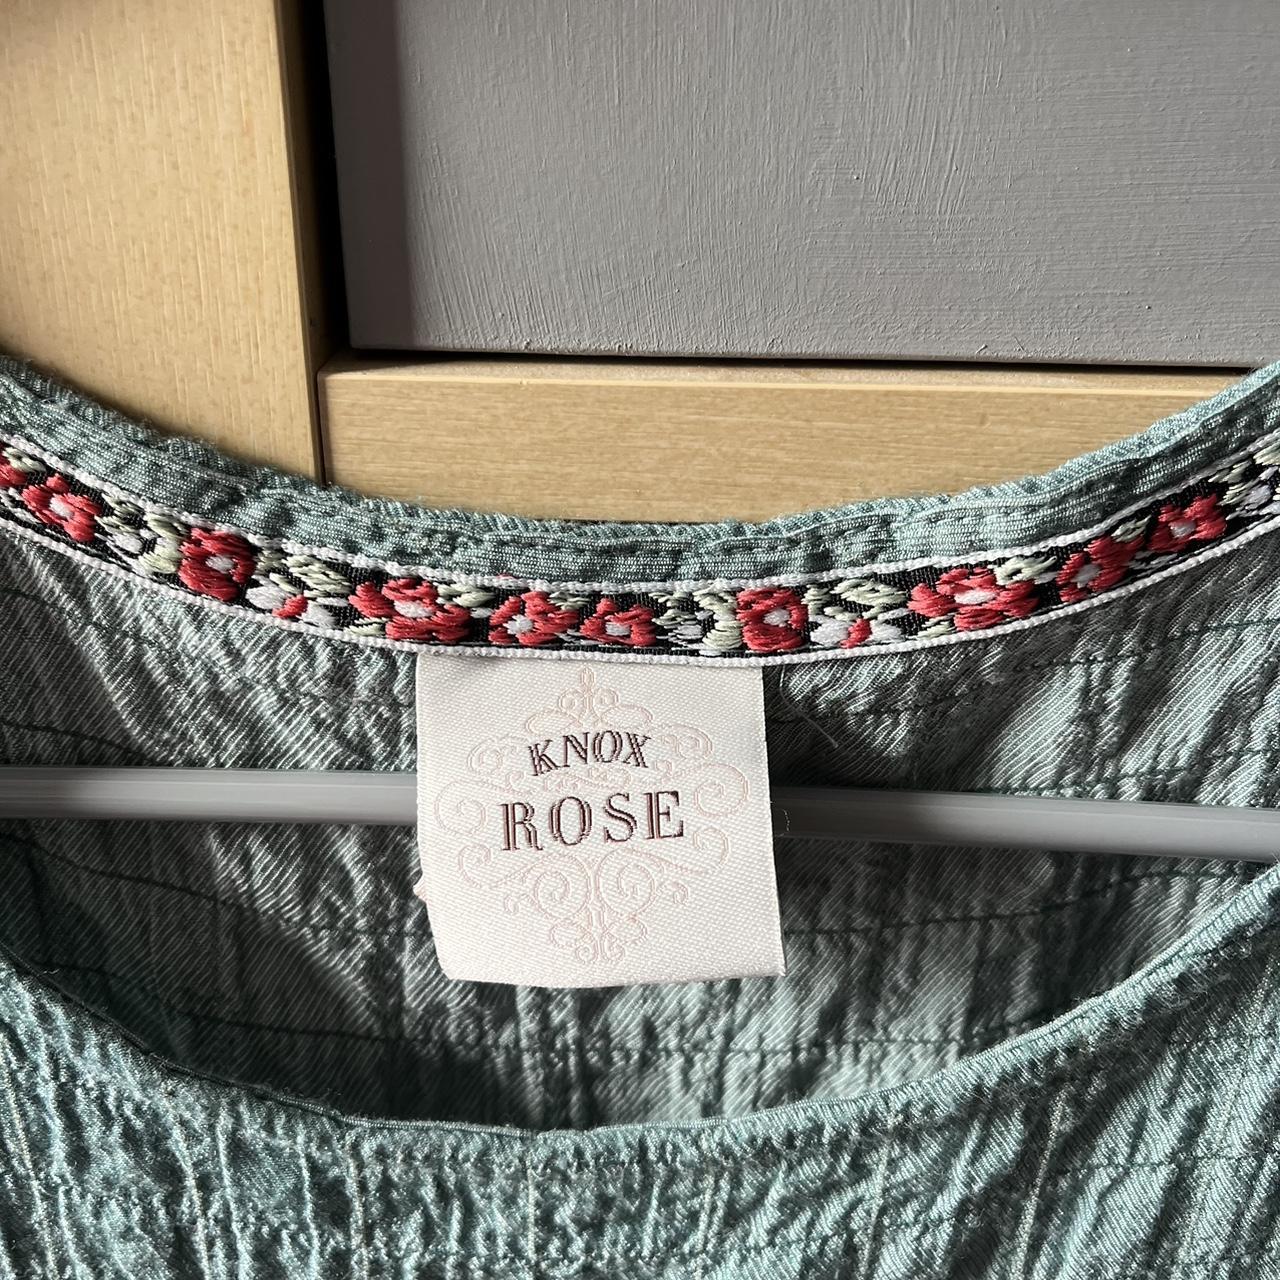 knox rose dress target｜TikTok Search